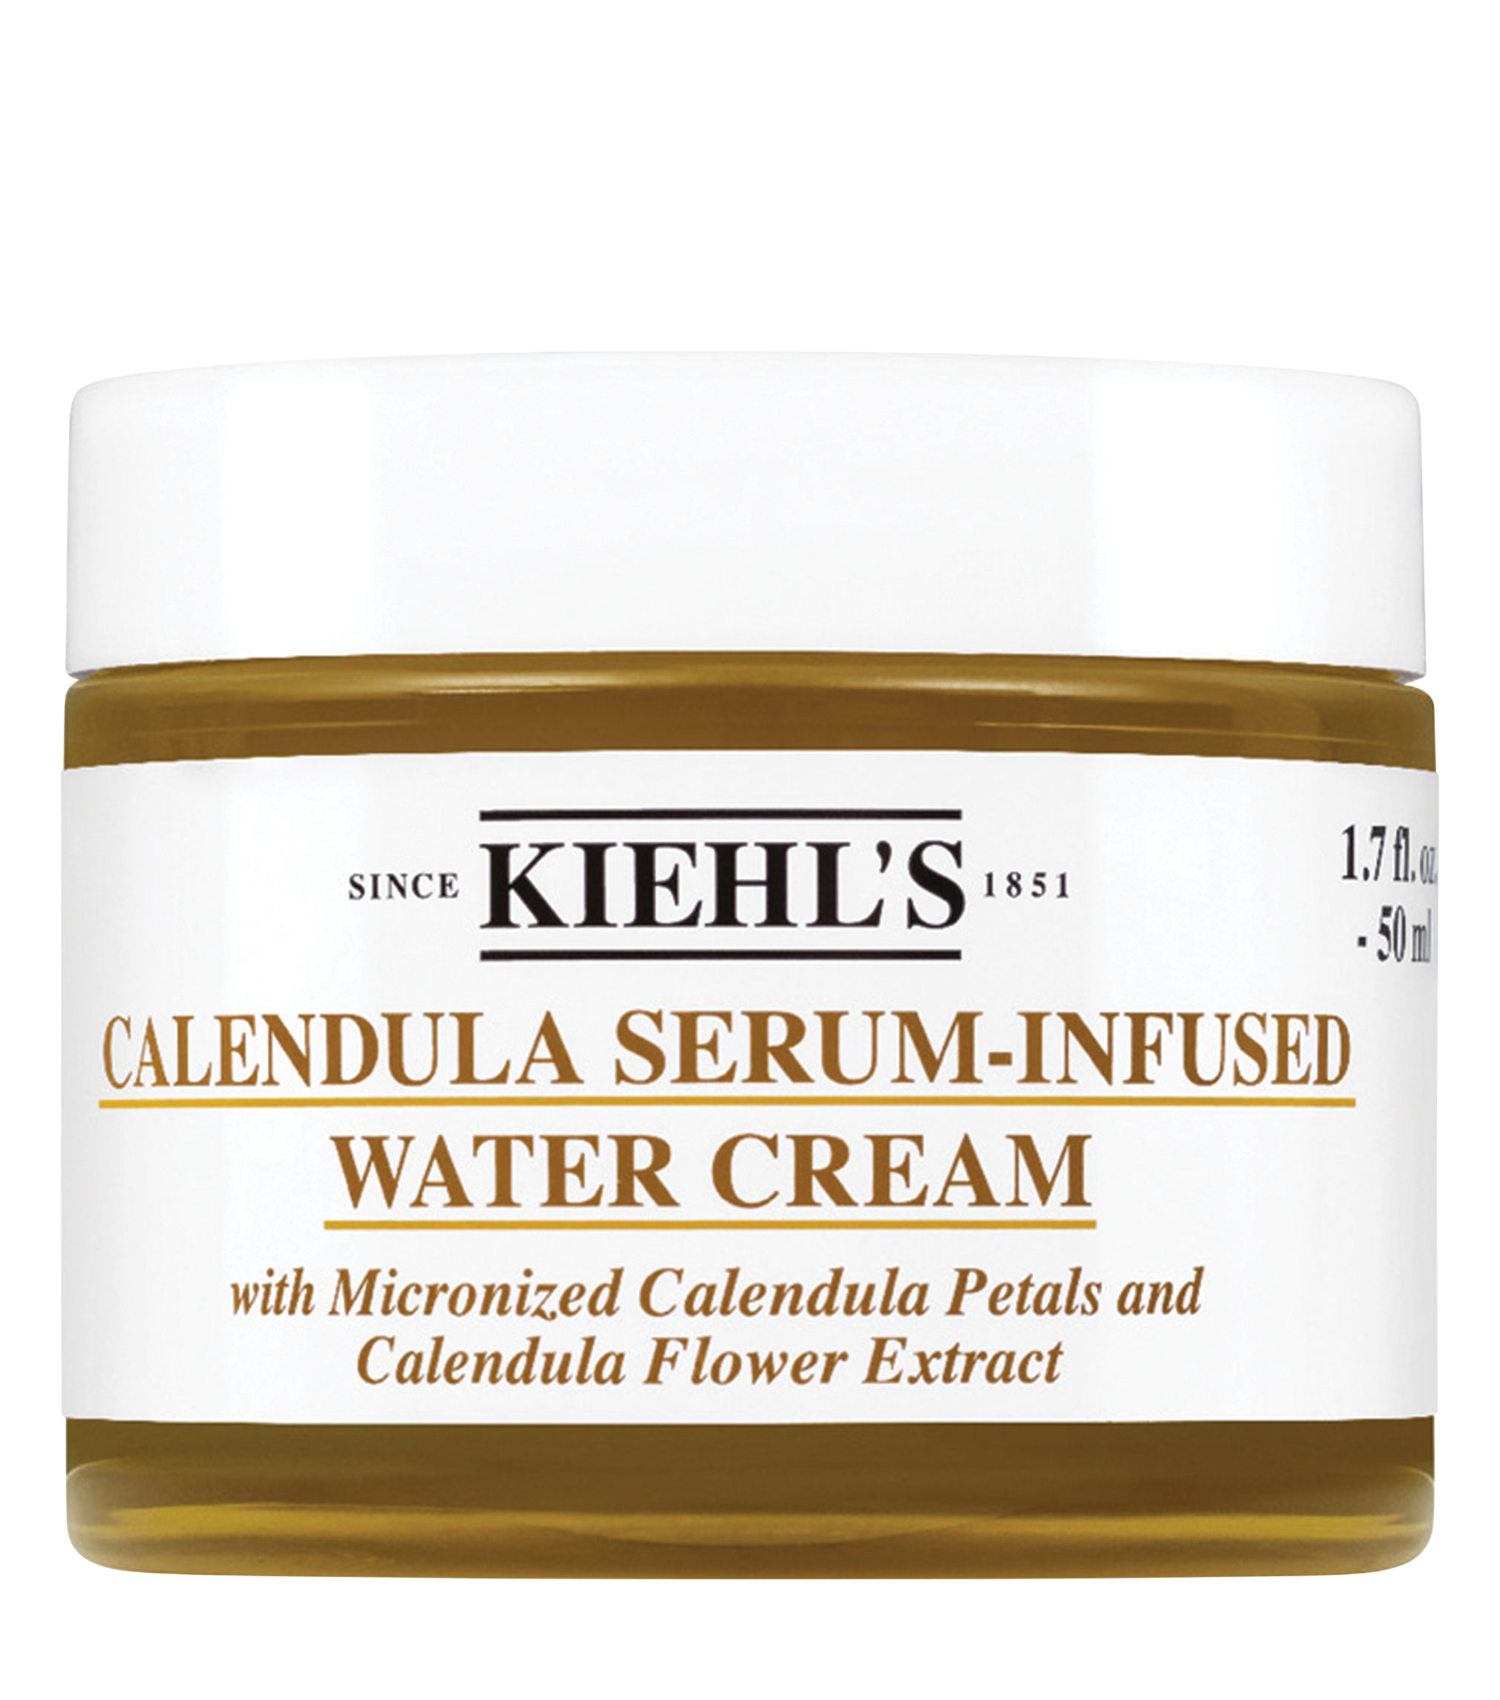 Calendula Serum-Infused Water Cream